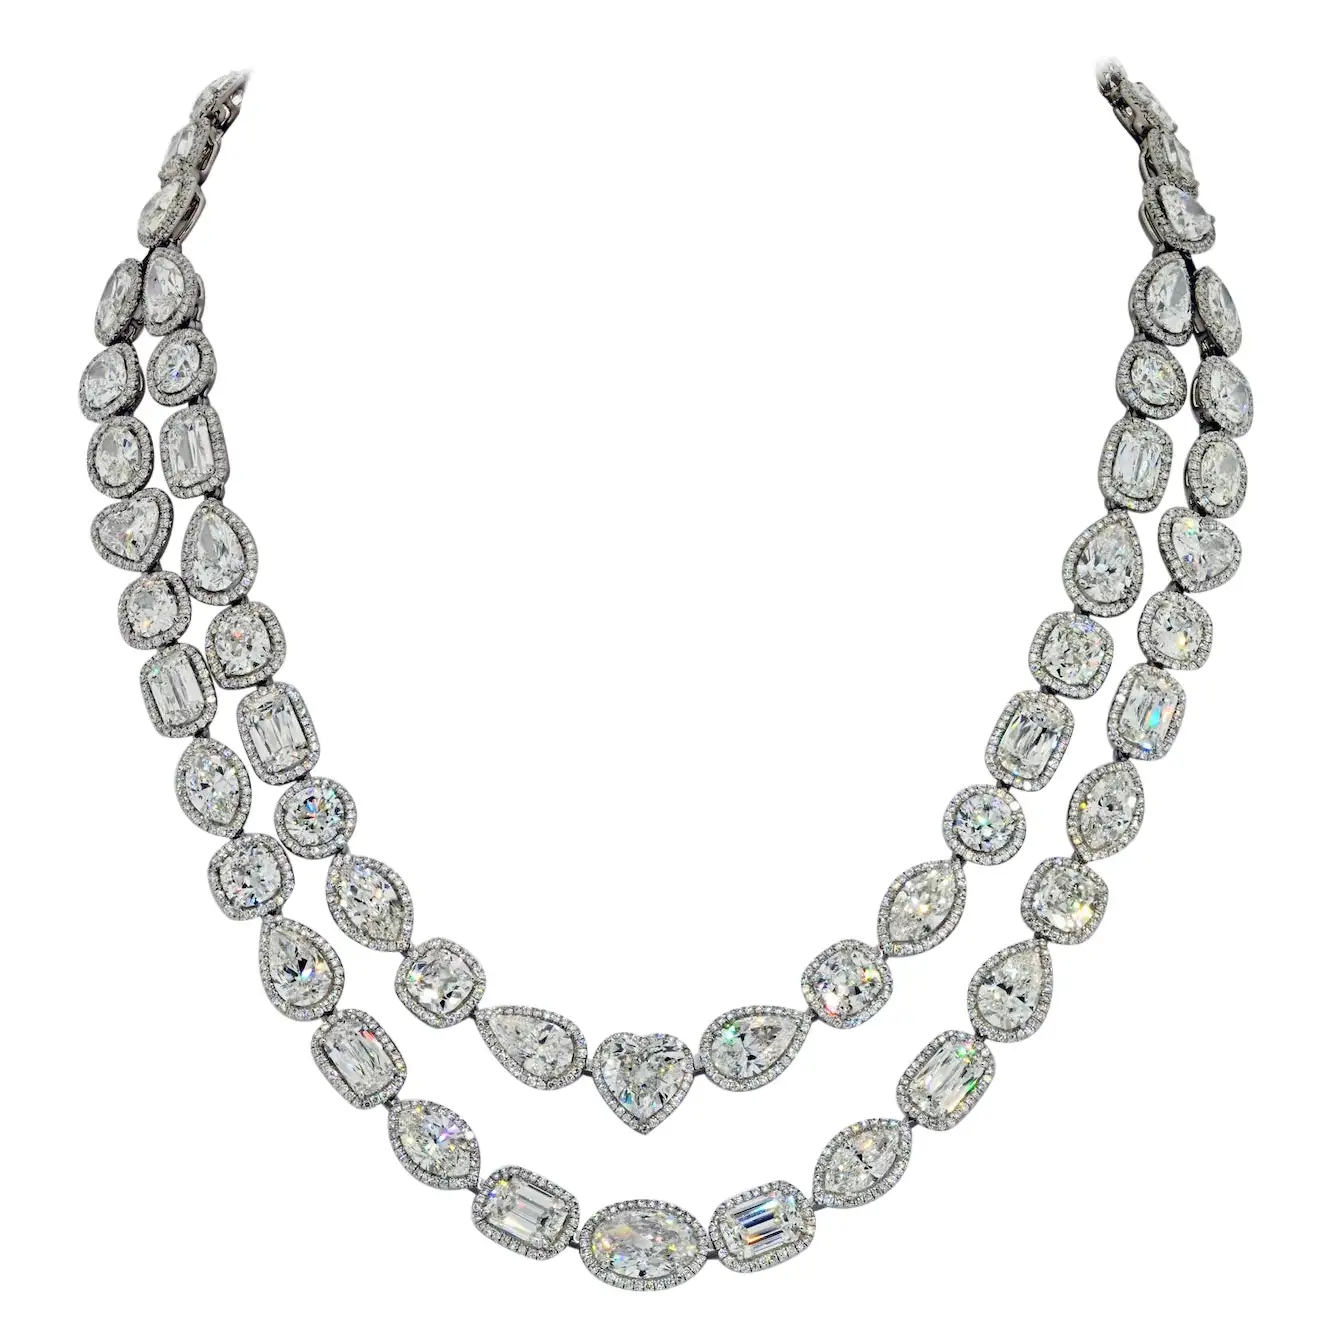 William-Goldberg-63-Carat-Spectacular-Diamond-Infinity-Necklace-1.webp